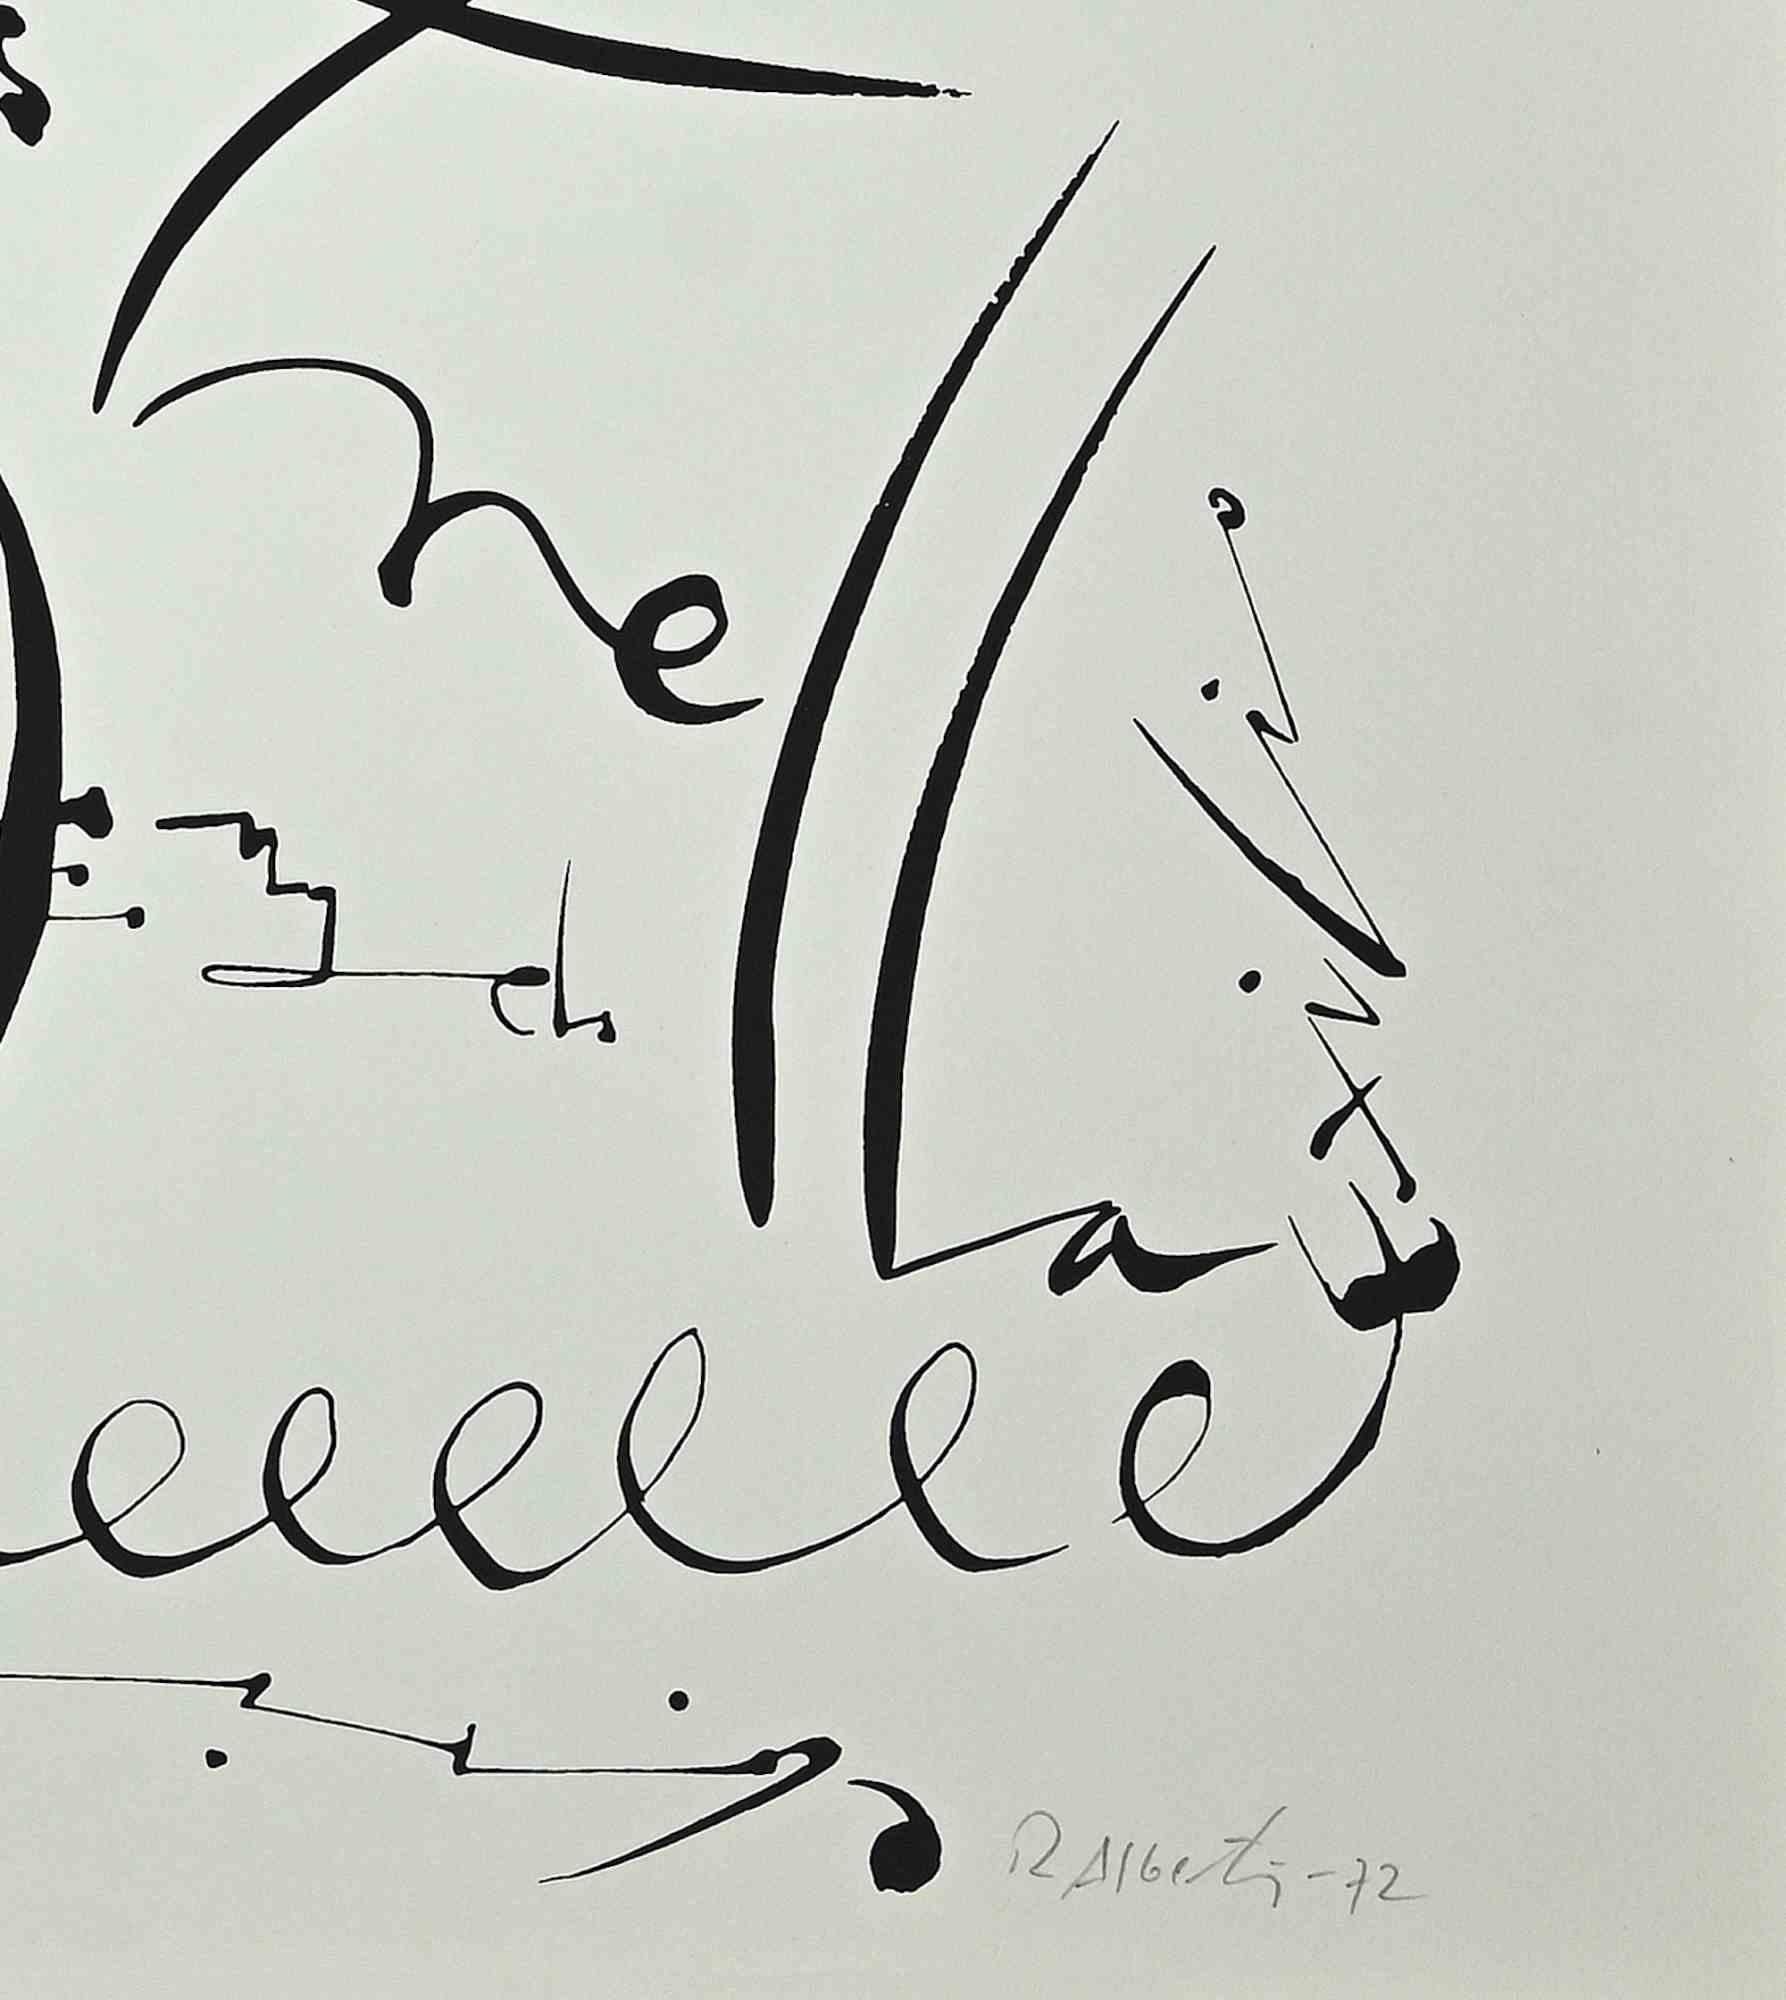 Letter E - Original Lithograph by Raphael Alberti - 1972 - Print by Rafael Alberti